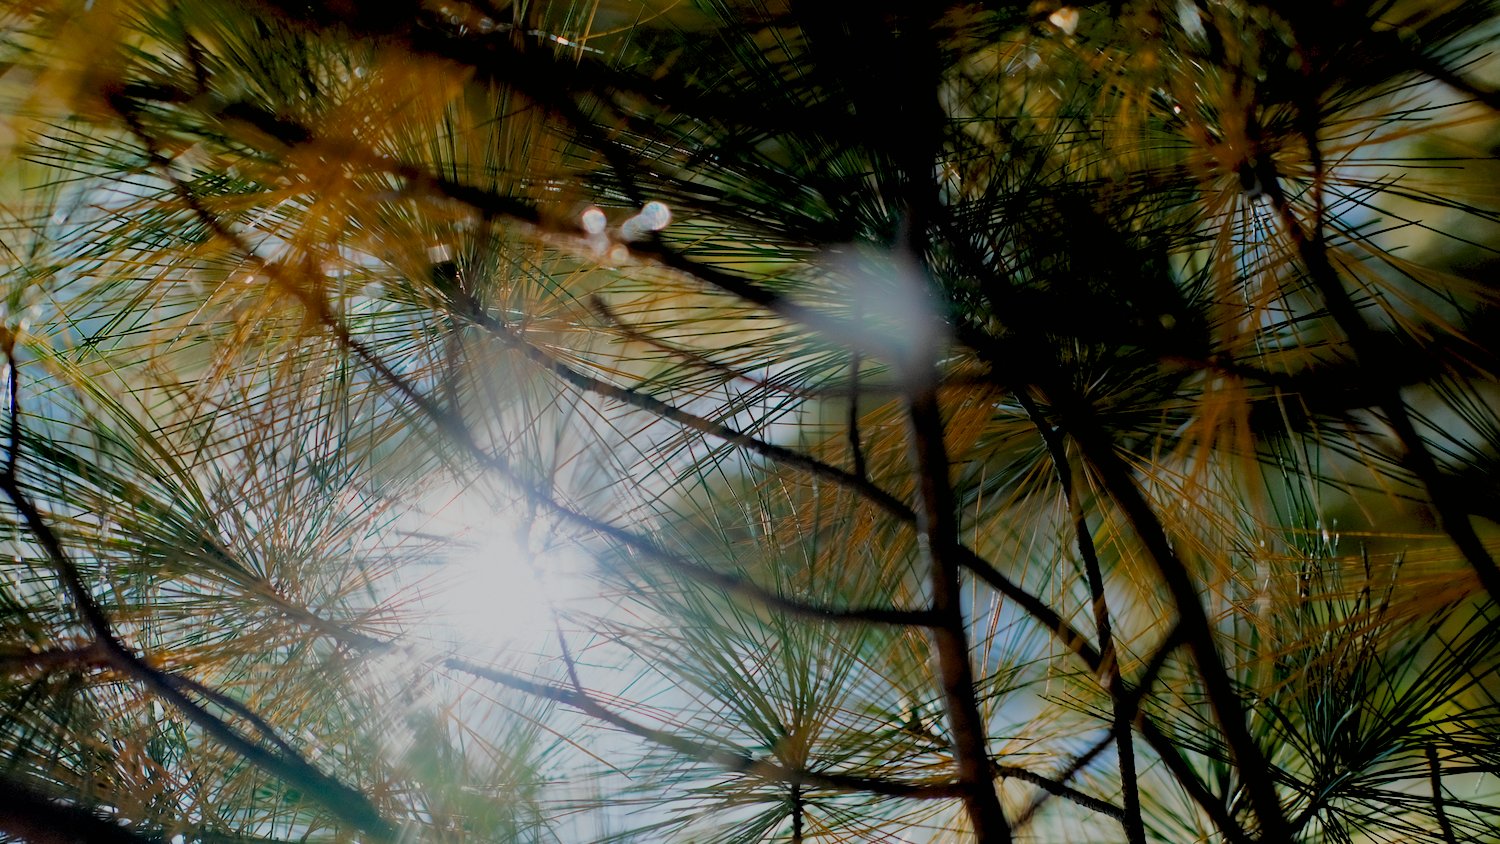 Sun shining through pine needles.